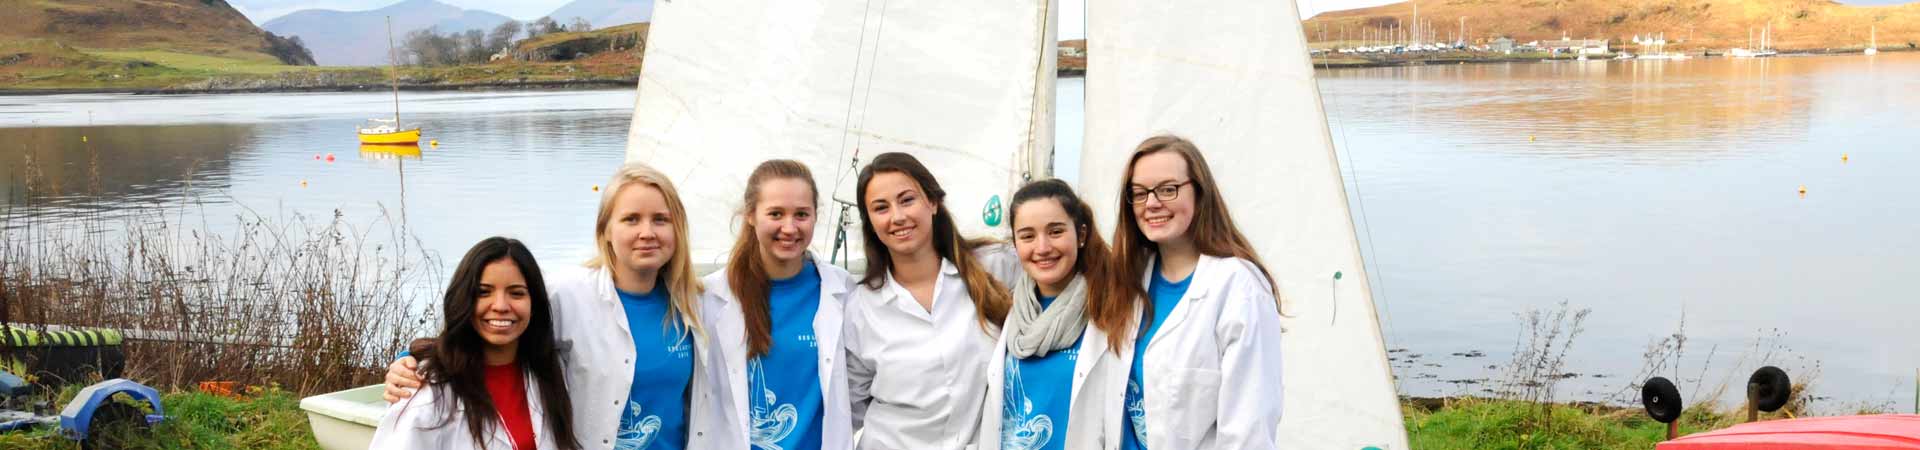 Ladies sailing team - all marine scientists